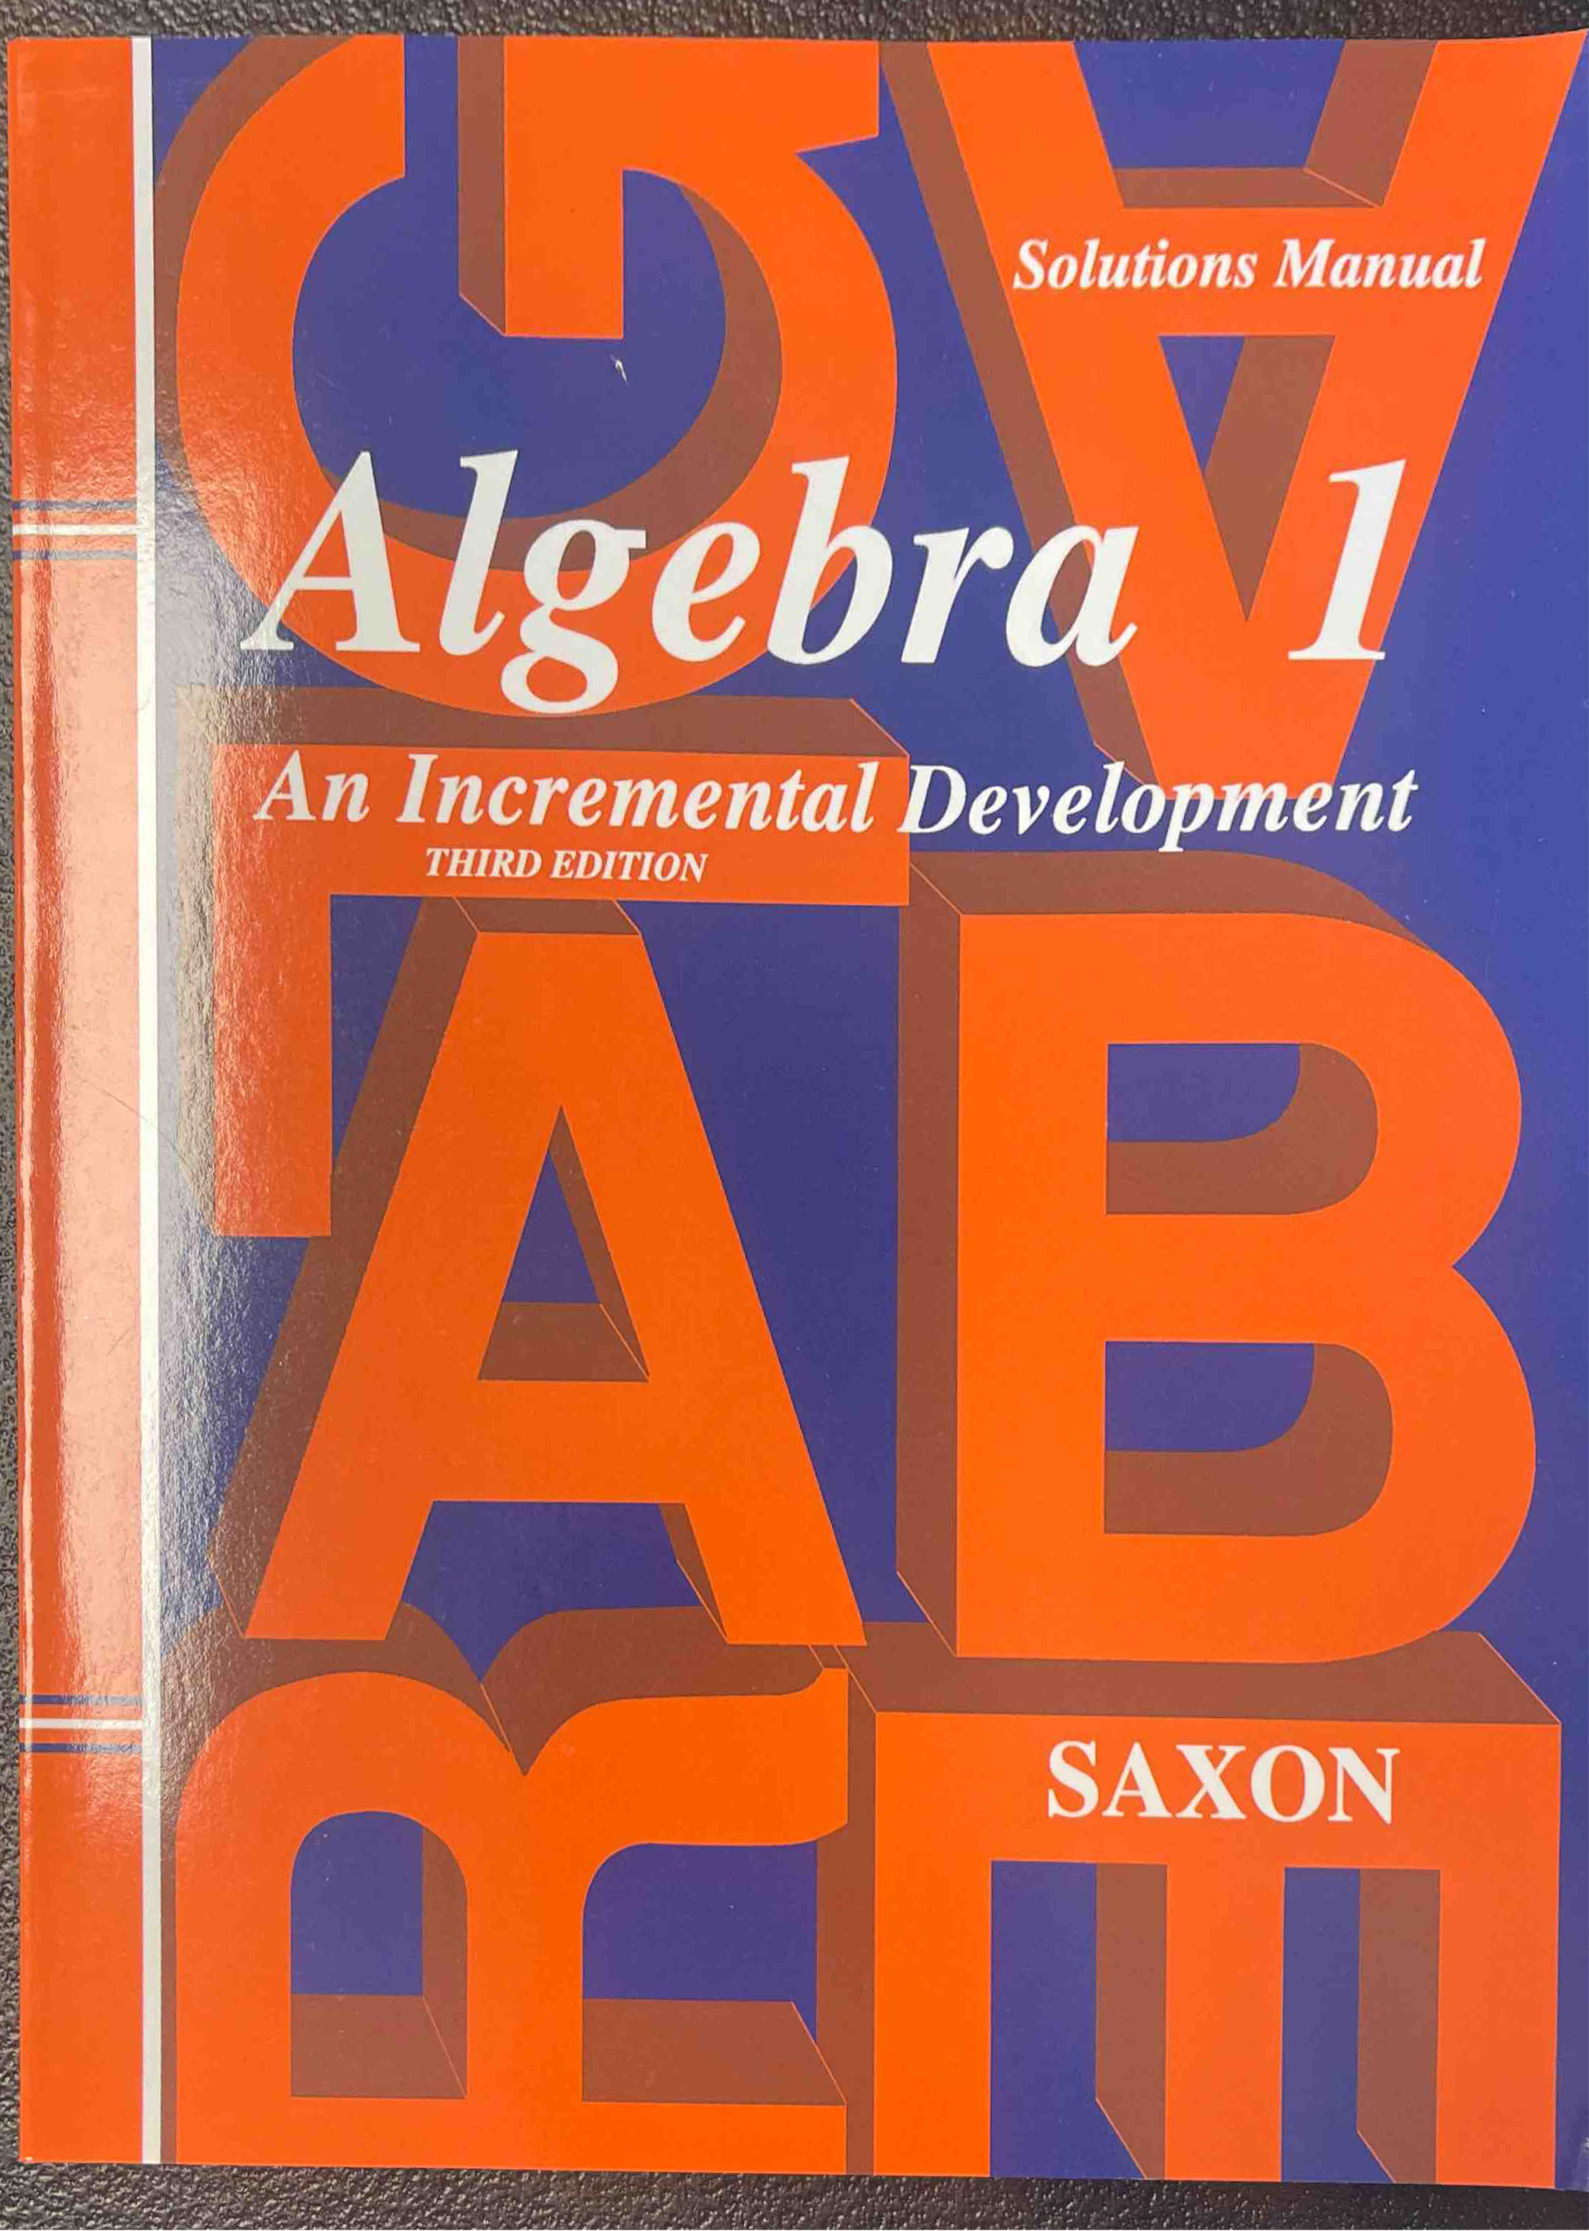 Algebra 1 An Incremental Development Third Edition Solutions Manual